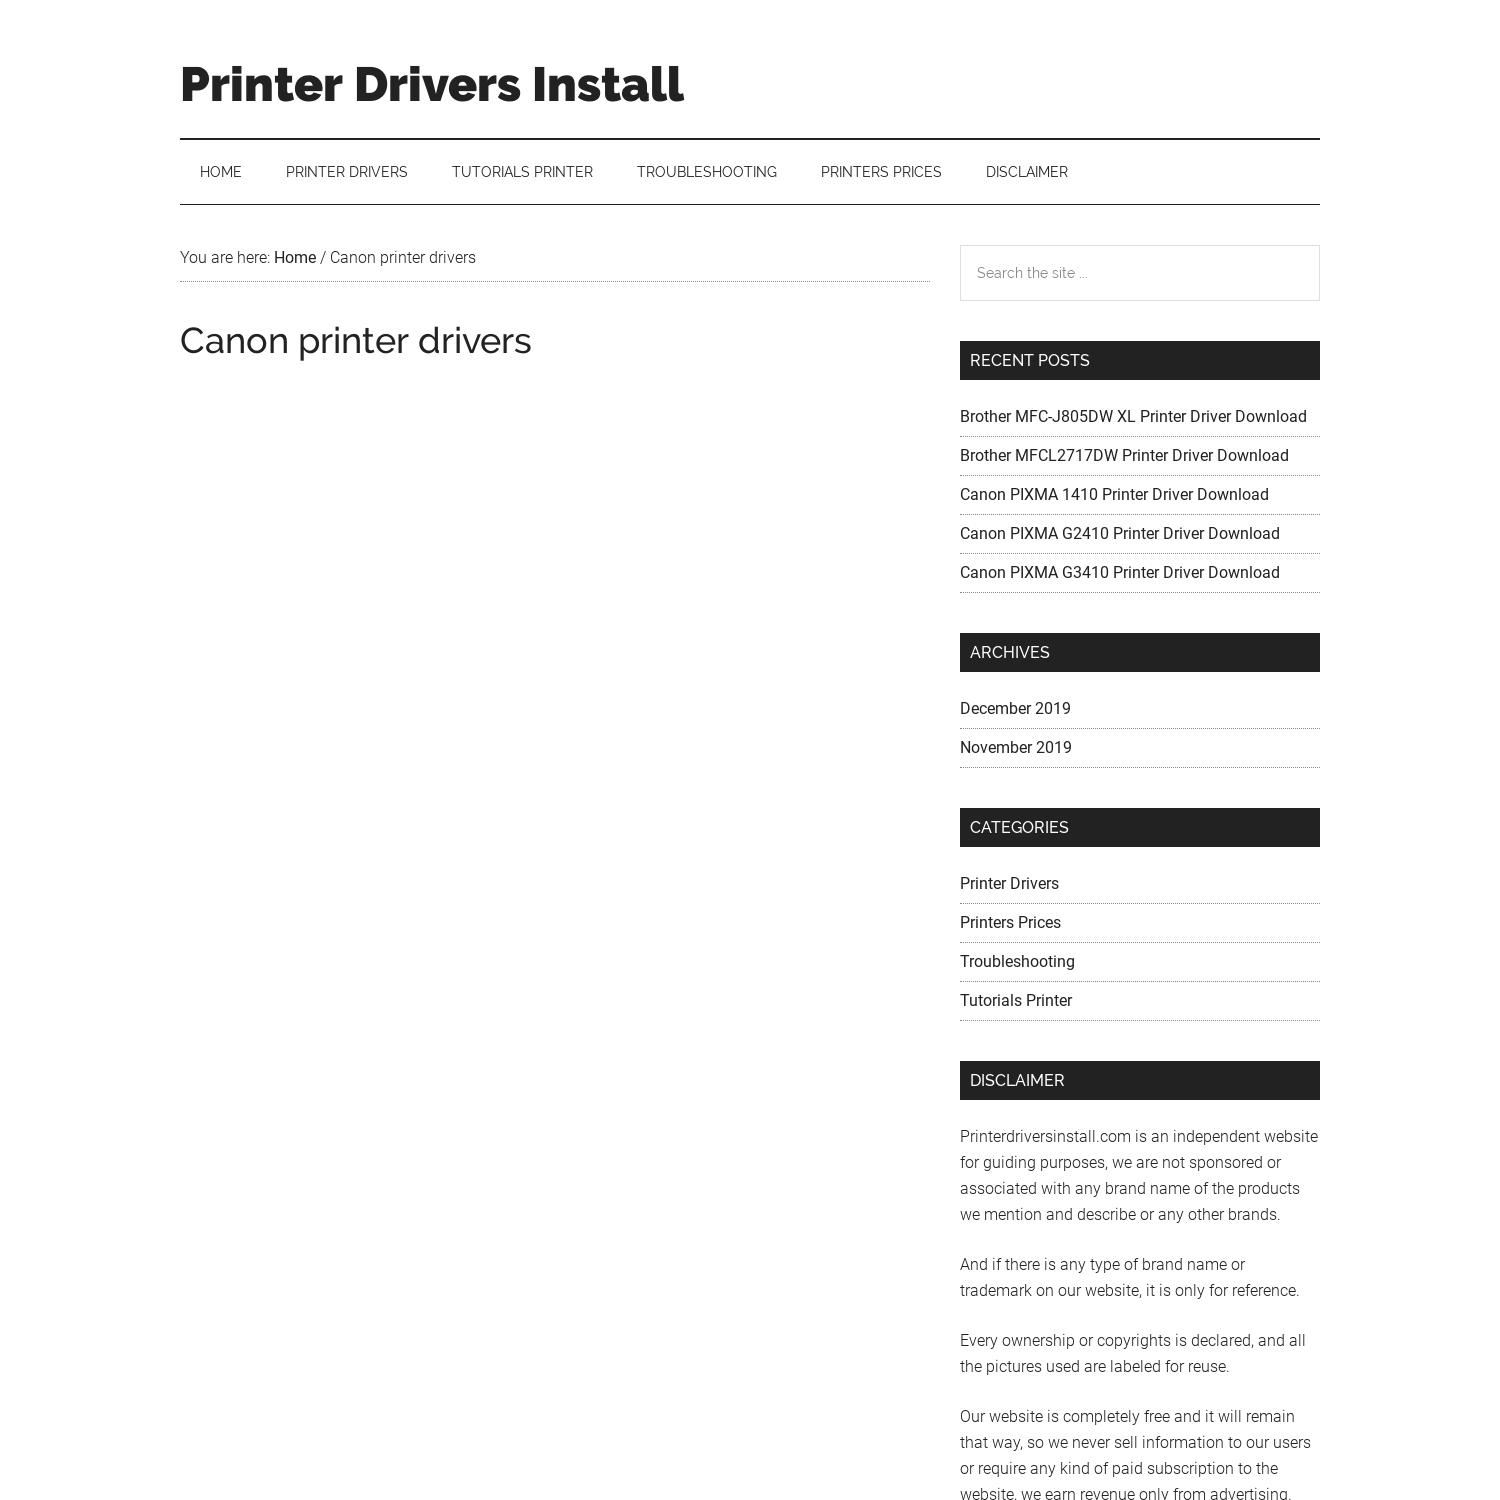 Canon printer drivers - Printer Drivers Install